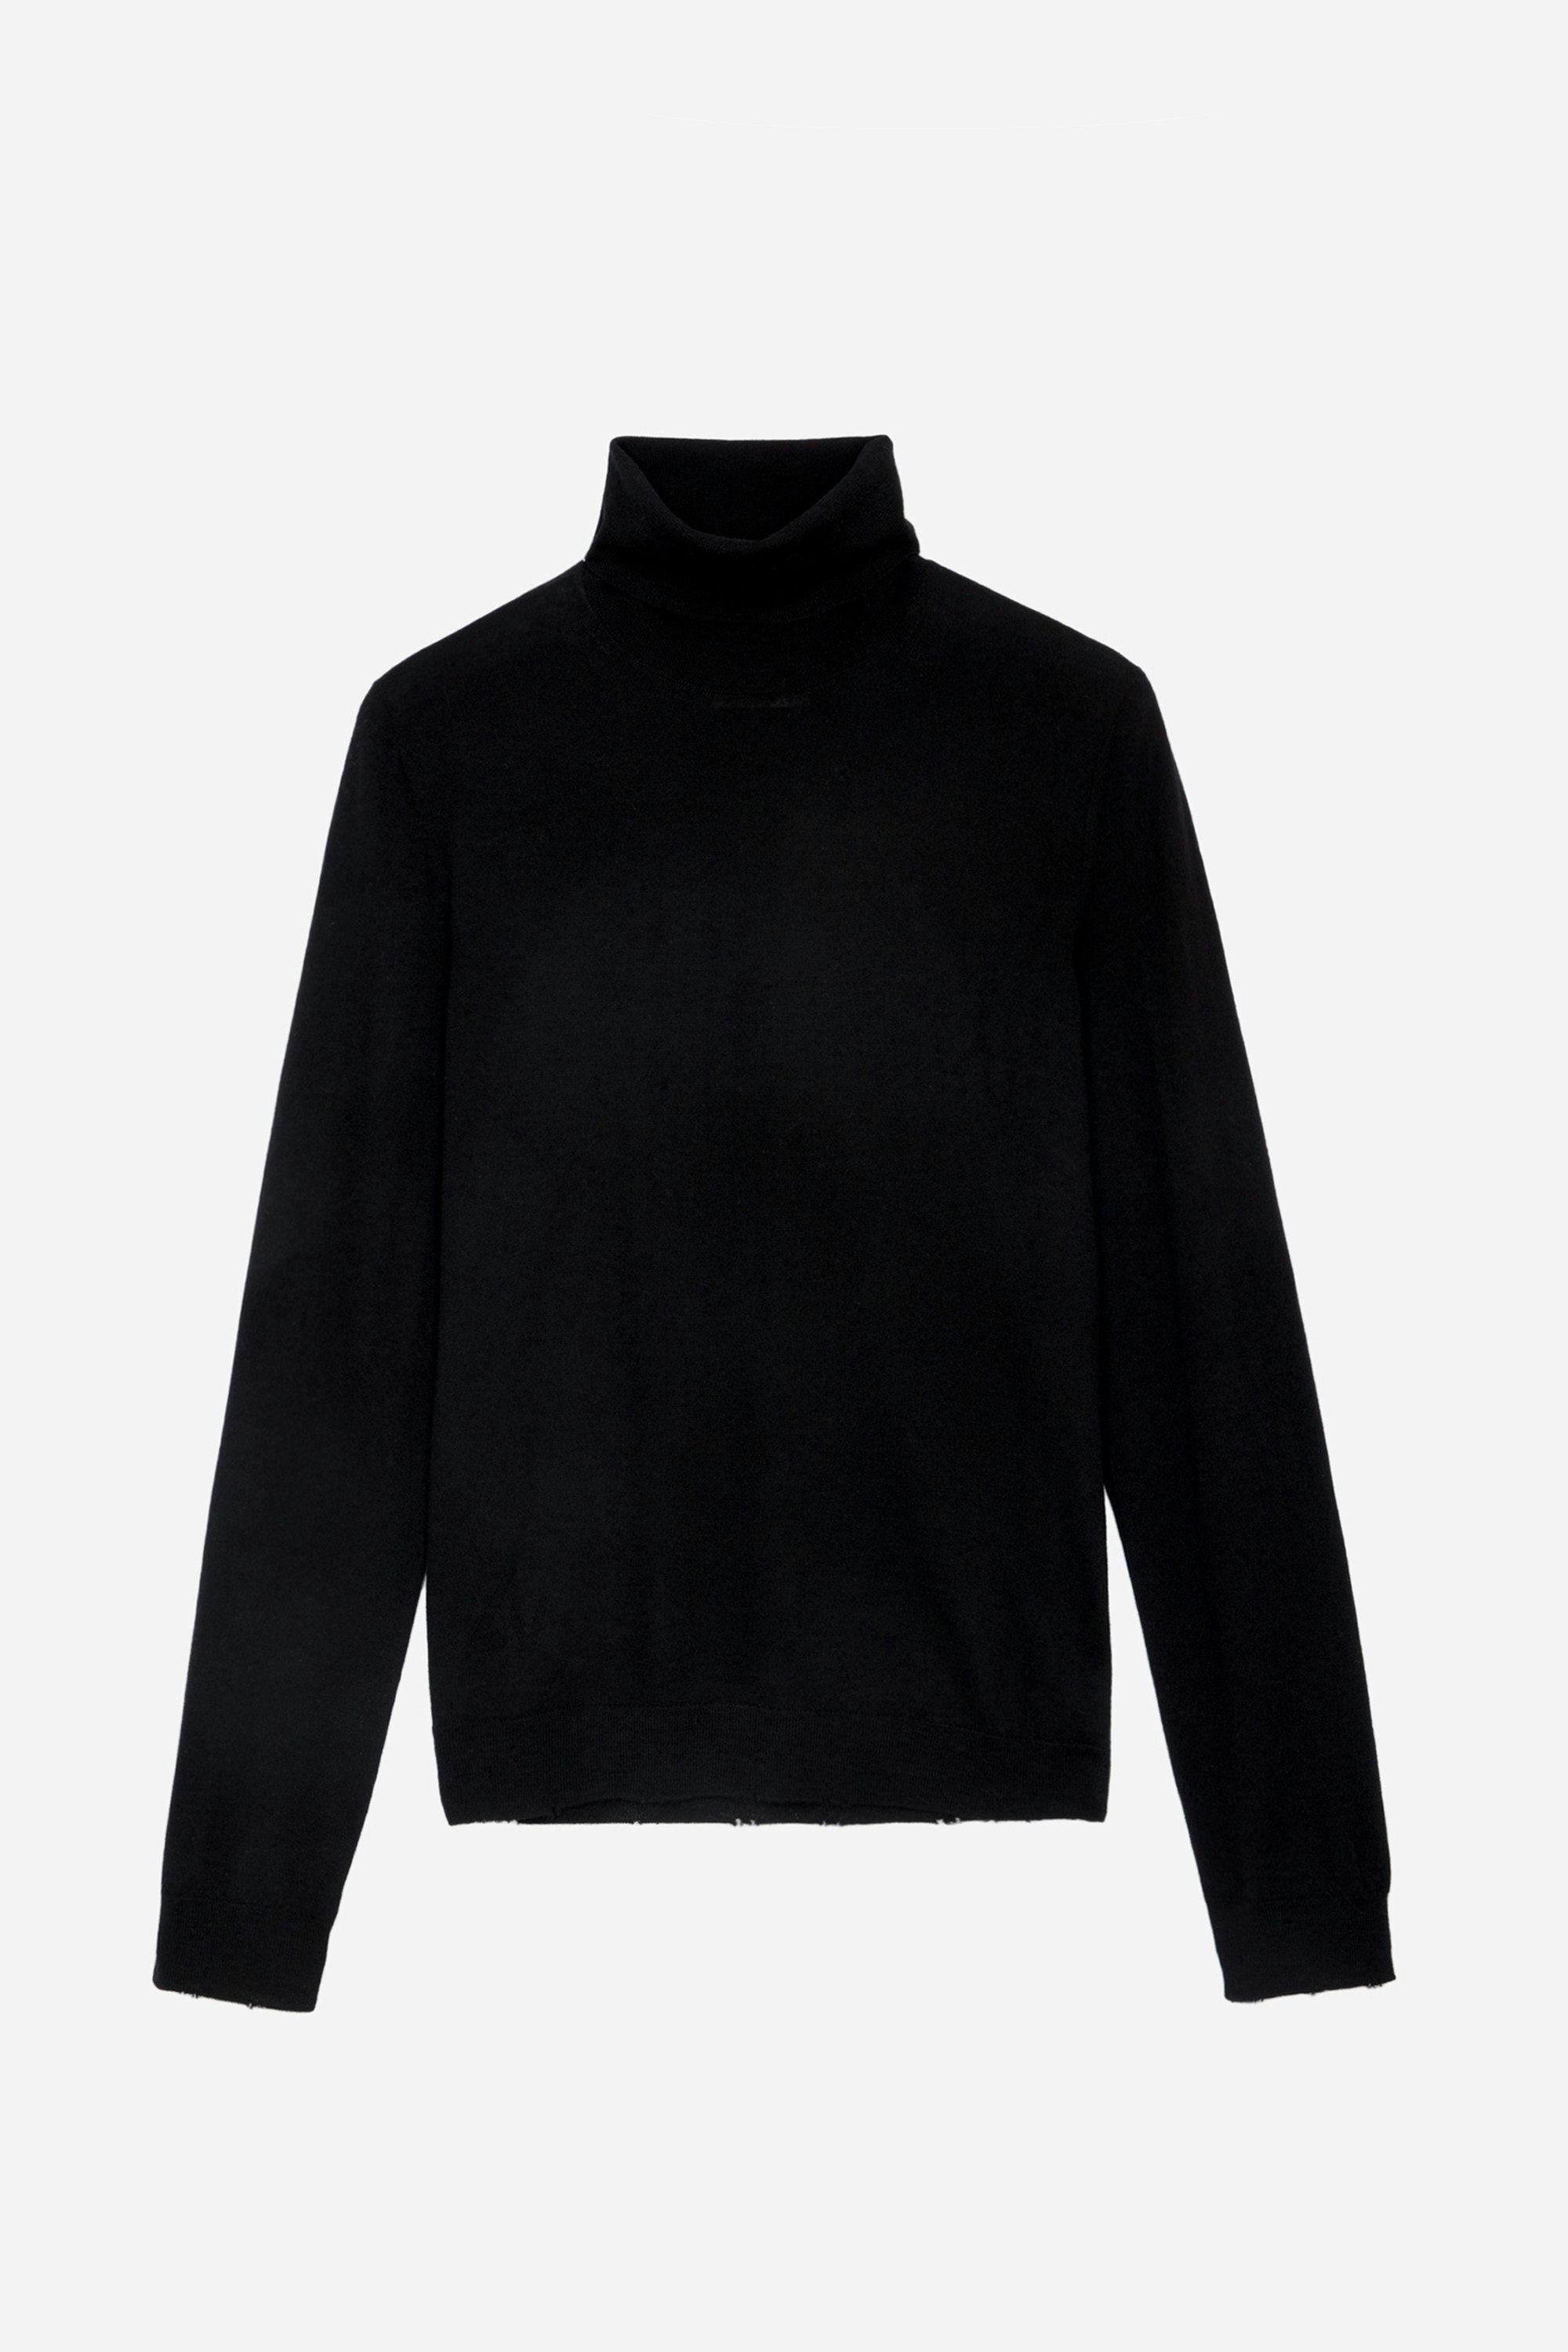 Bobby Sweater  - Unisex black merino wool turtleneck sweater.